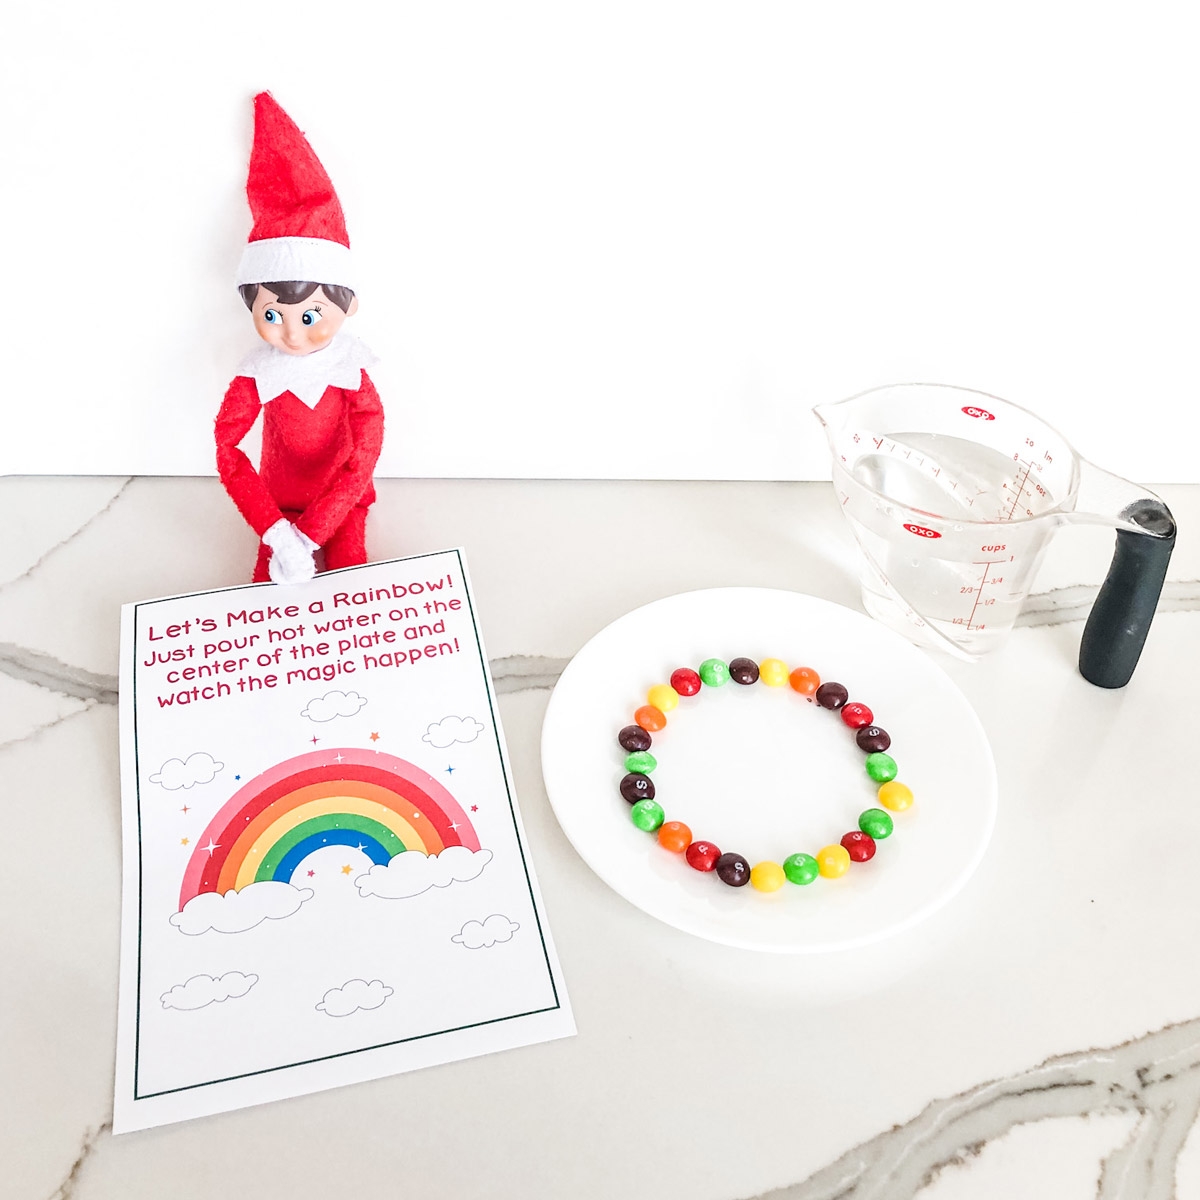 Elf On The Shelf Skittles Rainbow Printable